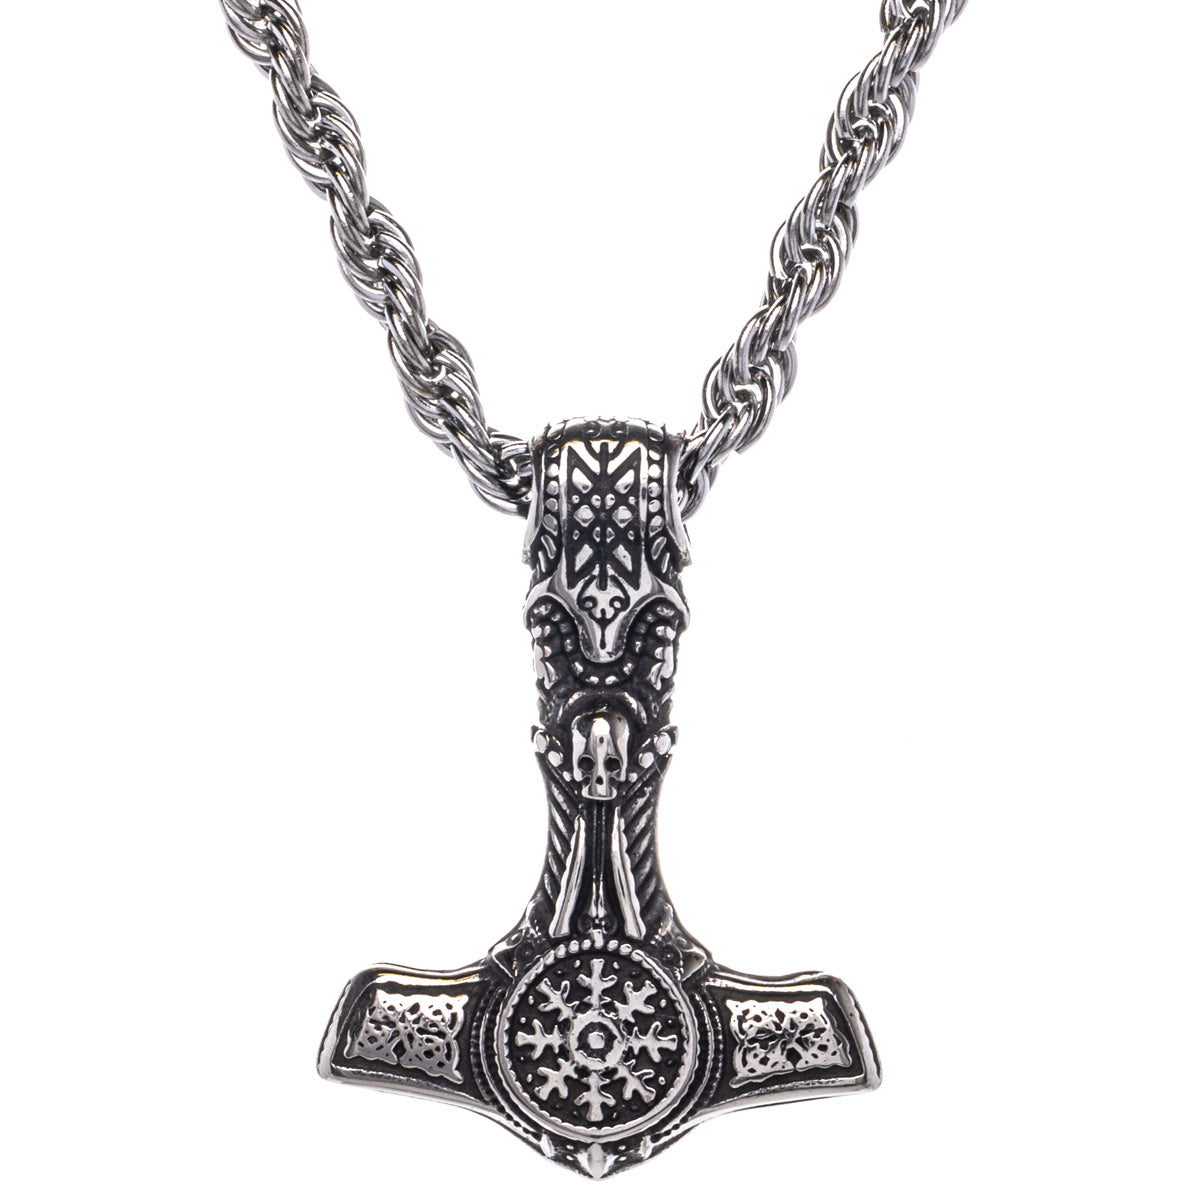 Aegishjalmur Mjölnir Thor's hammer pendant necklace (Steel 316L)